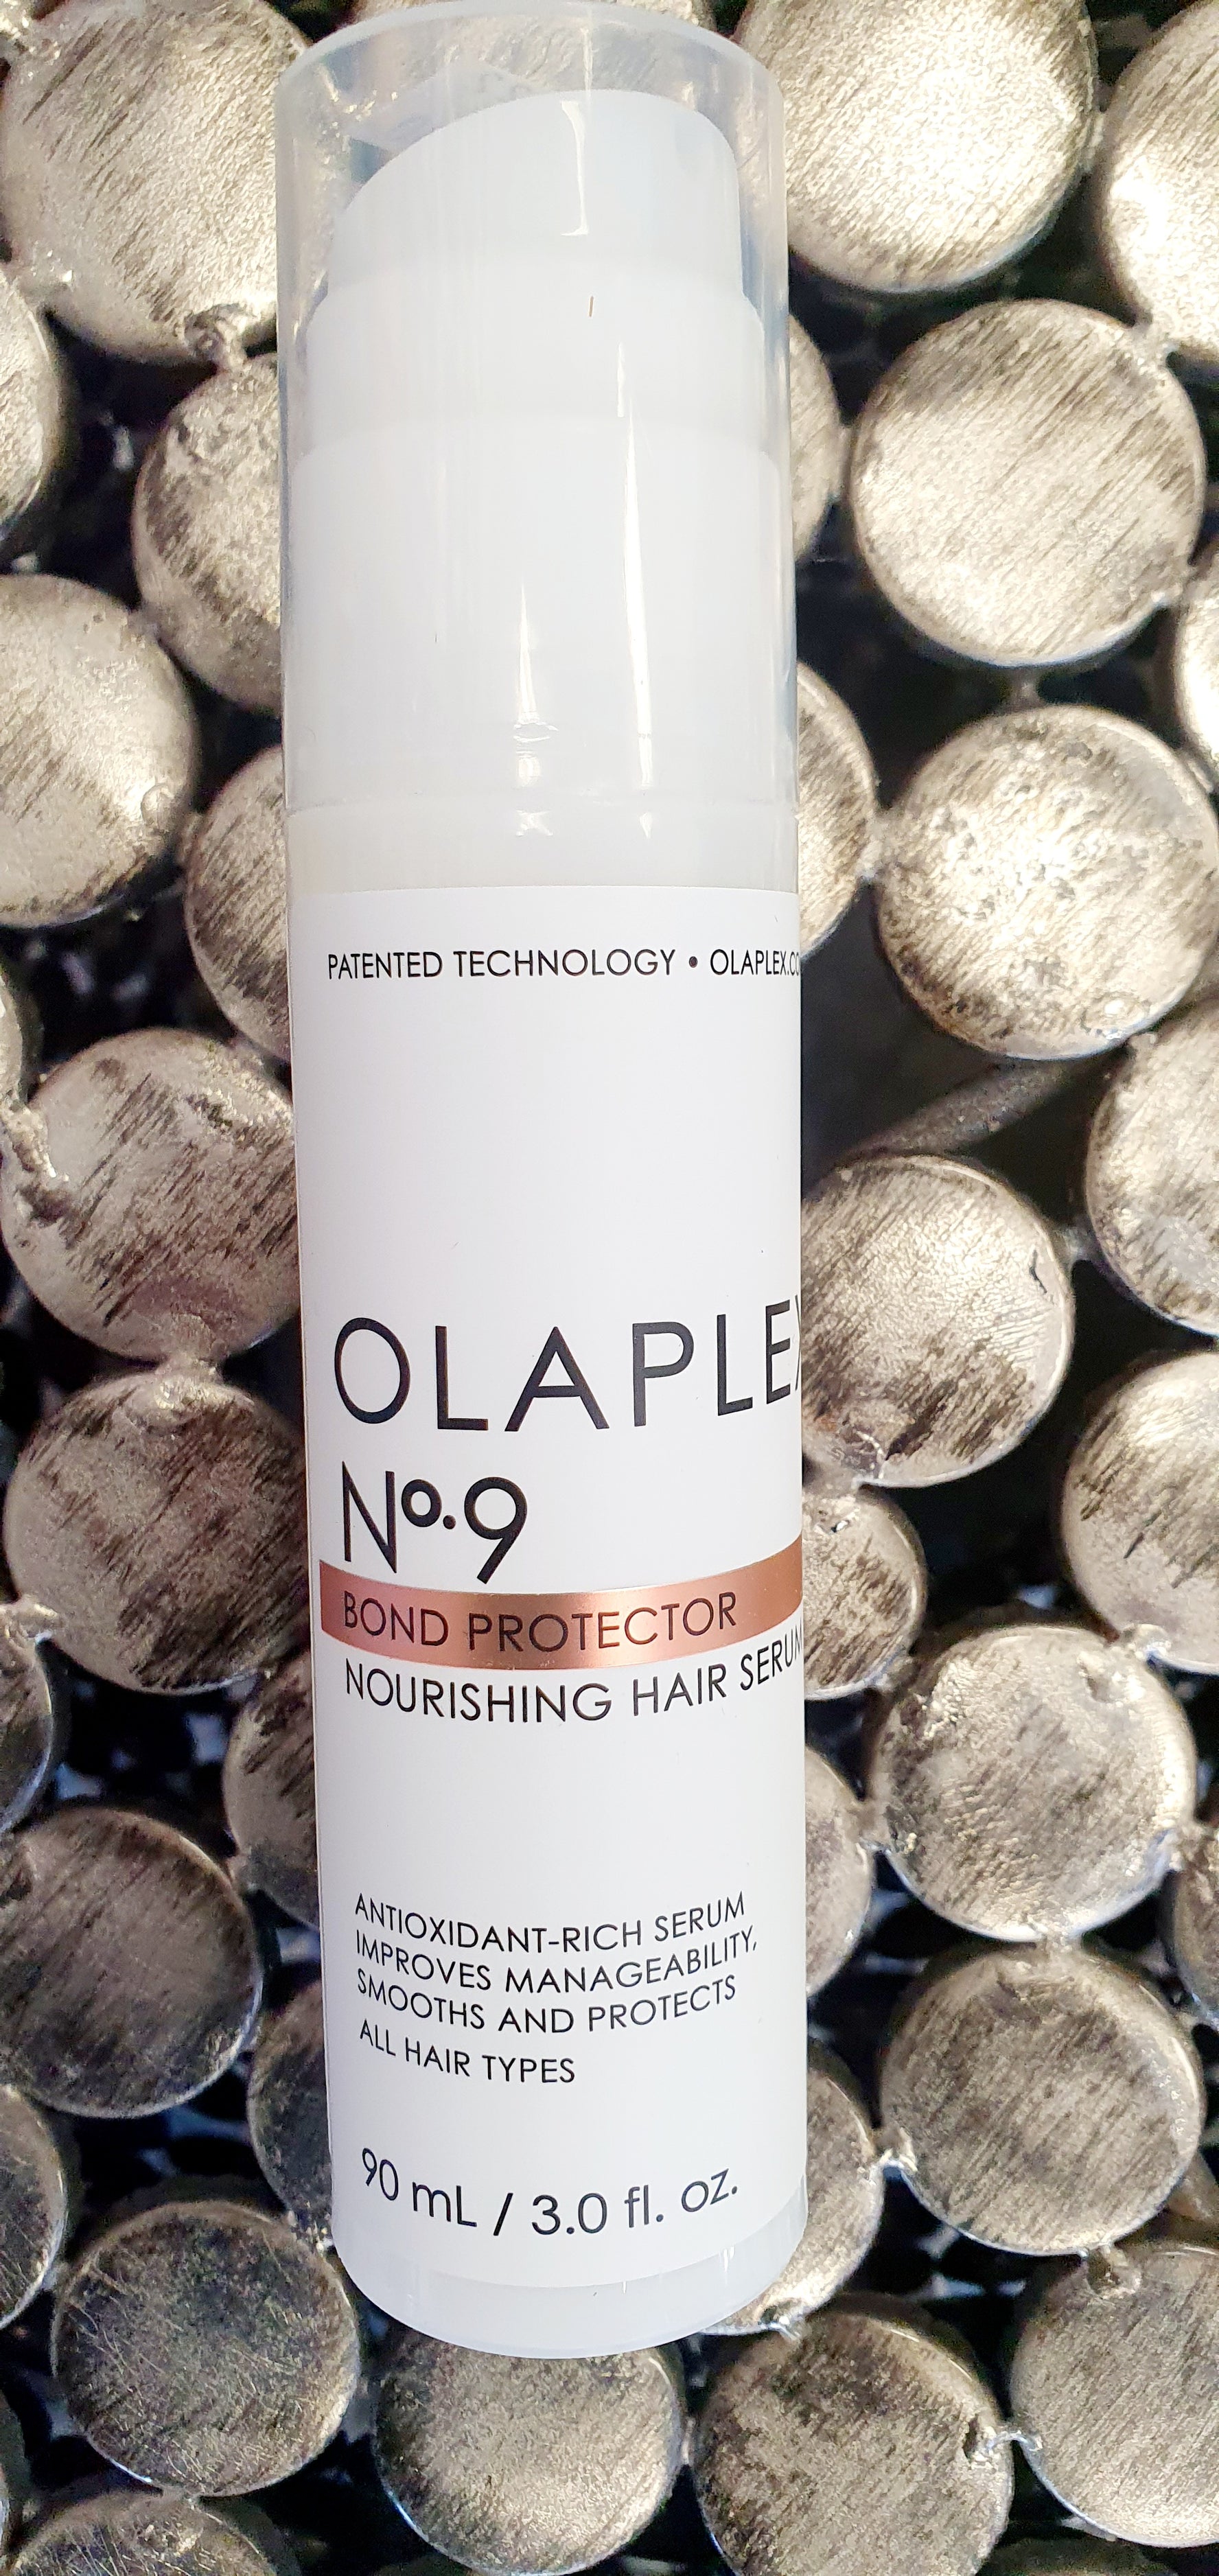 Olaplex No9 Bond protector nourishing Hair Serum